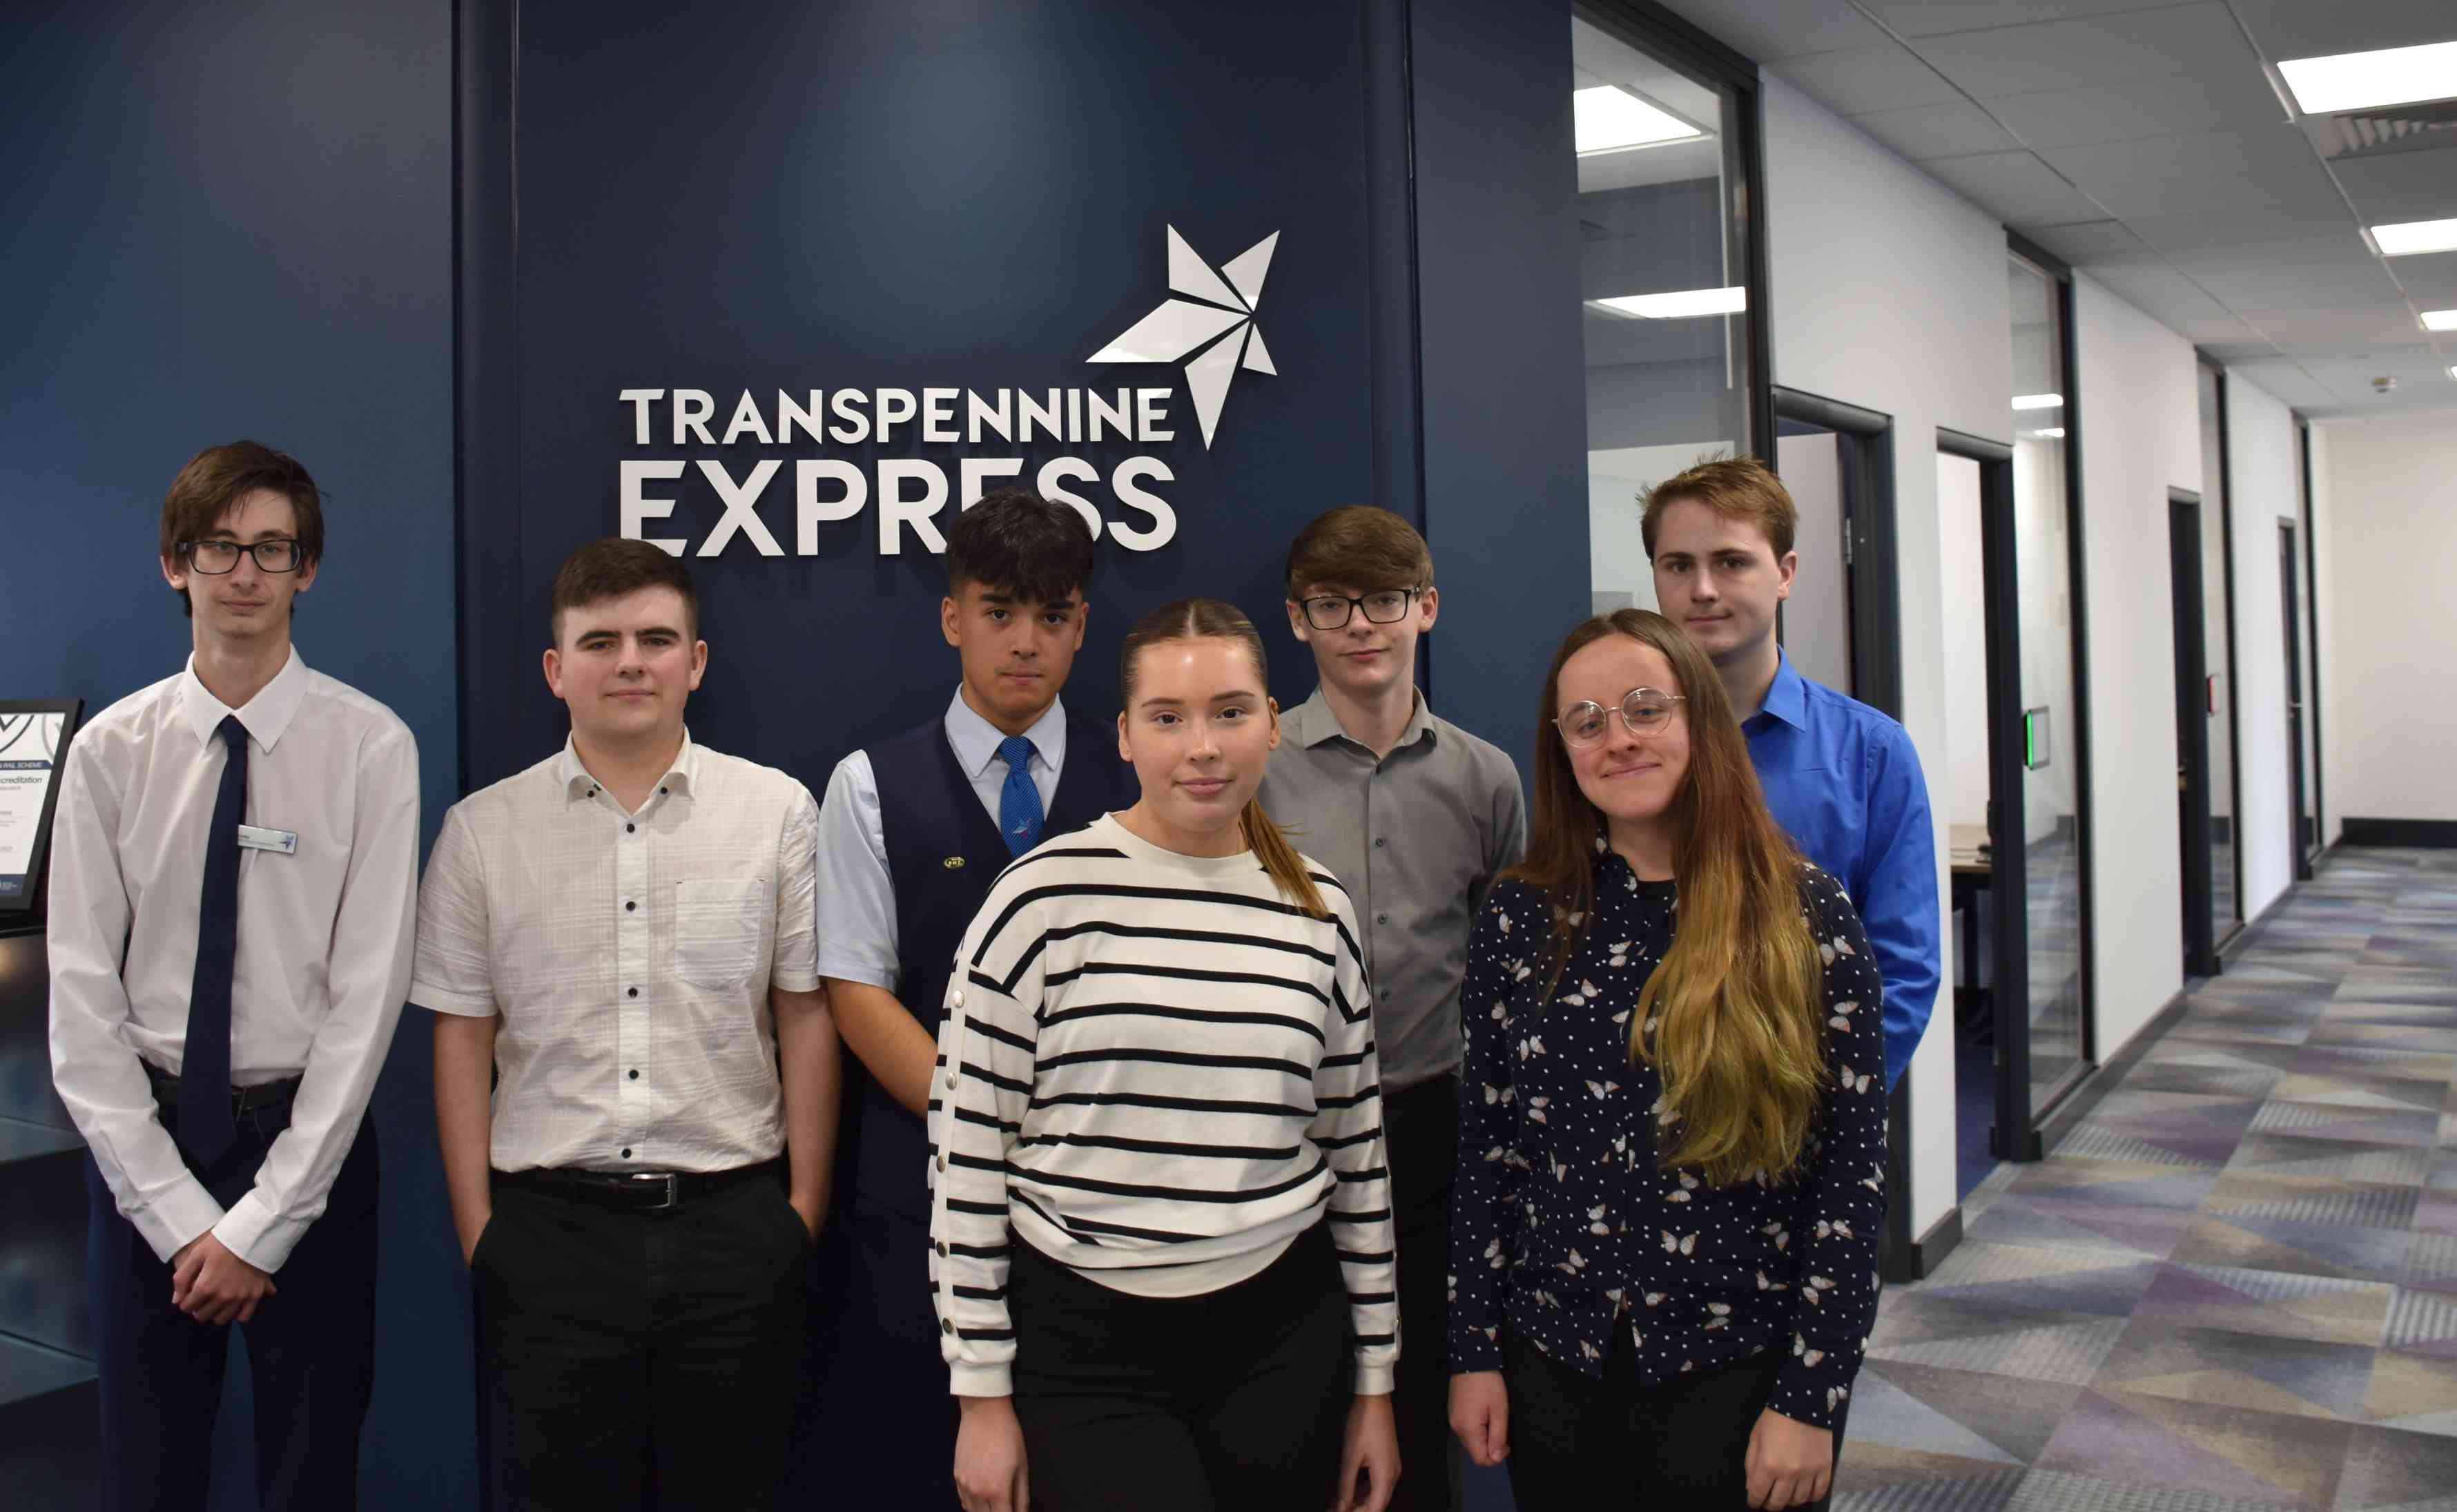 7 TransPennine Express apprentices stood in a line in front of a TransPennine Express sign